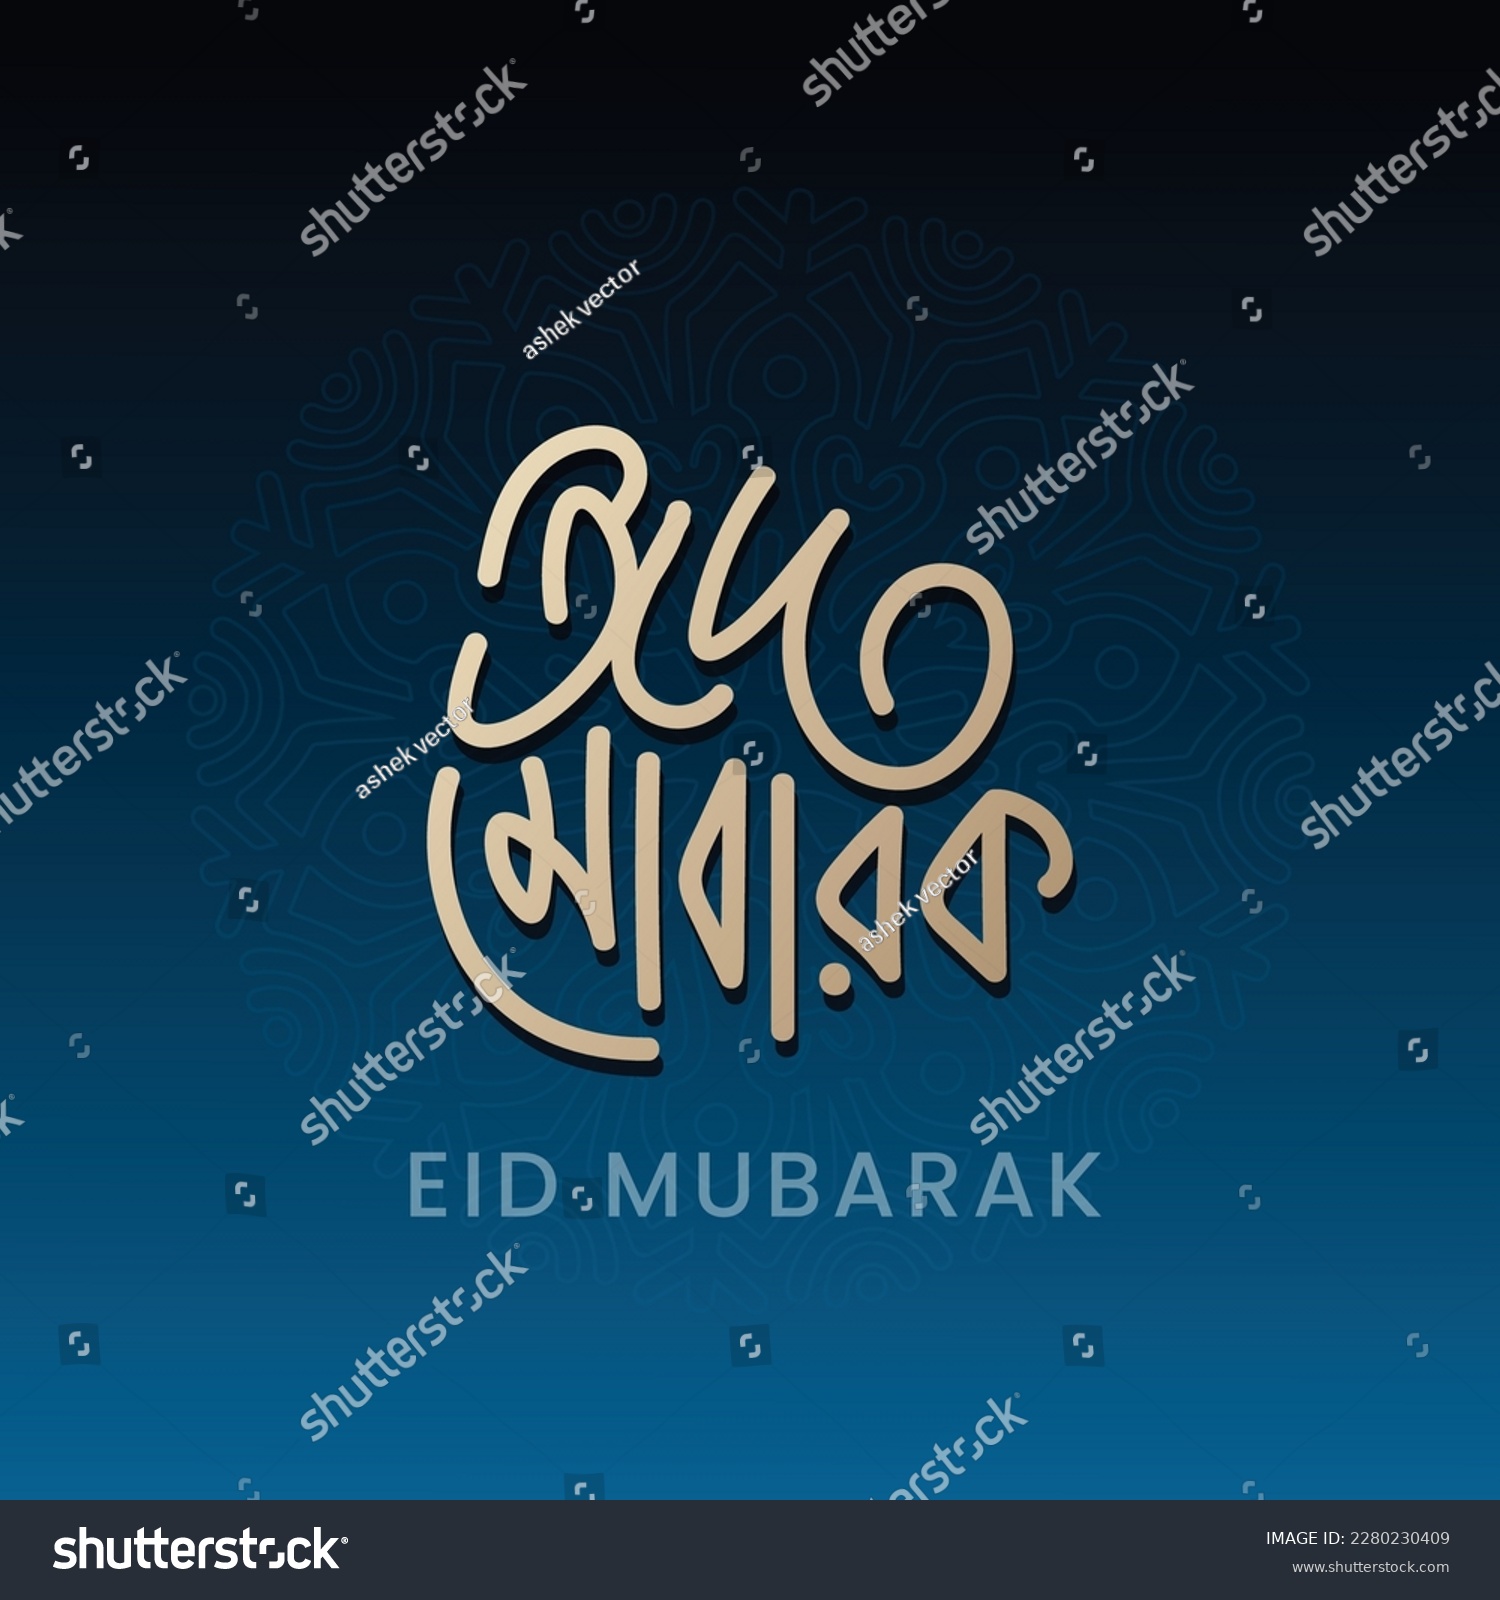 SVG of Eid Mubarak Bangla typography on blue islamic background. Eid ul Adha vector illustration. Religious holidays celebrated by Muslims worldwide. 
Eid Mubarak greeting card template design. svg